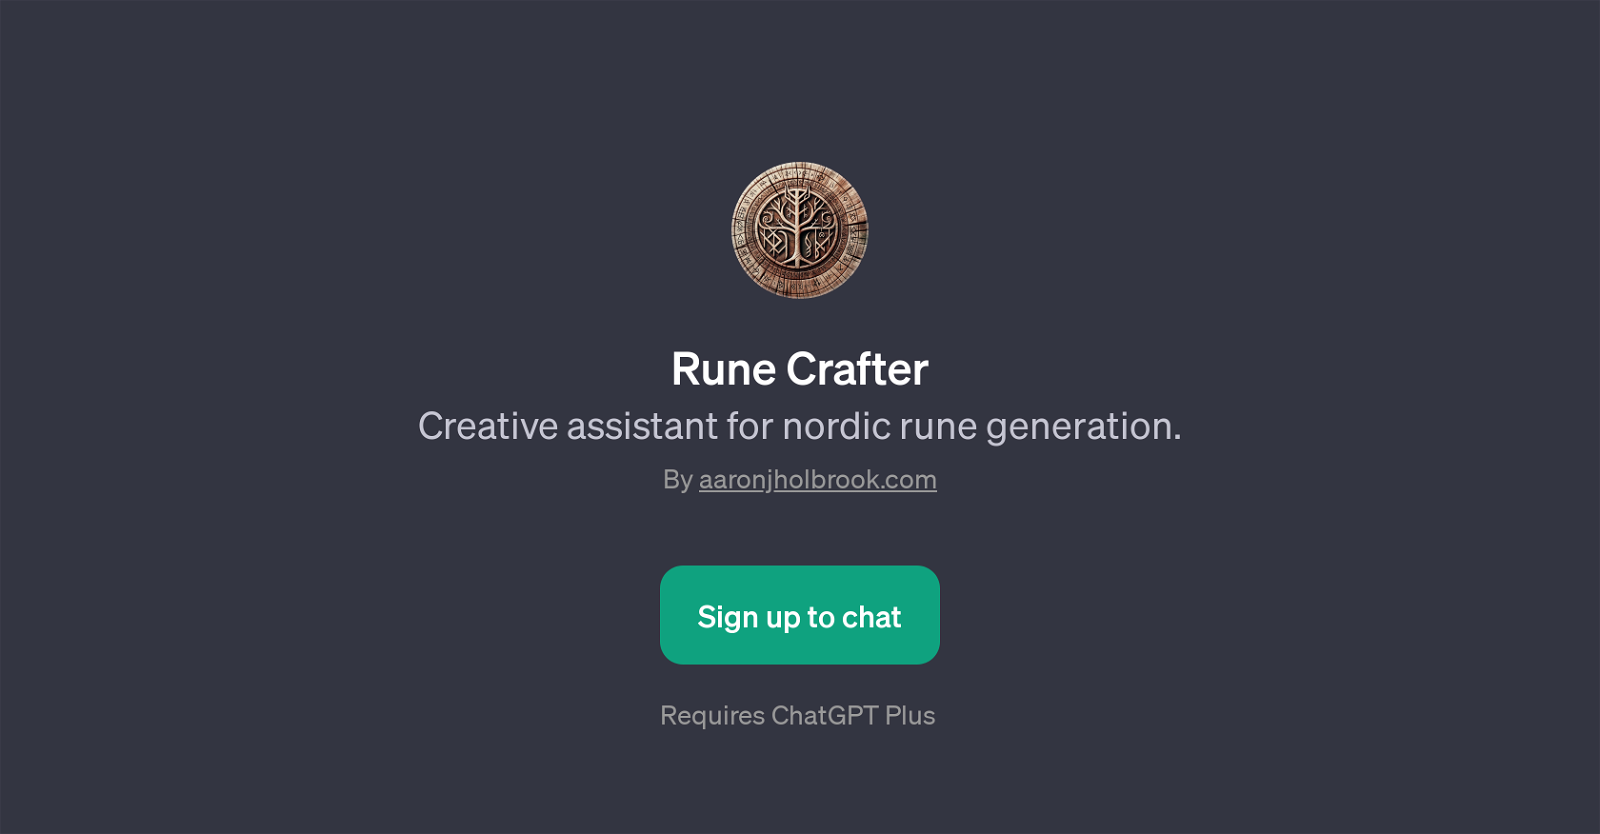 Rune Crafter website